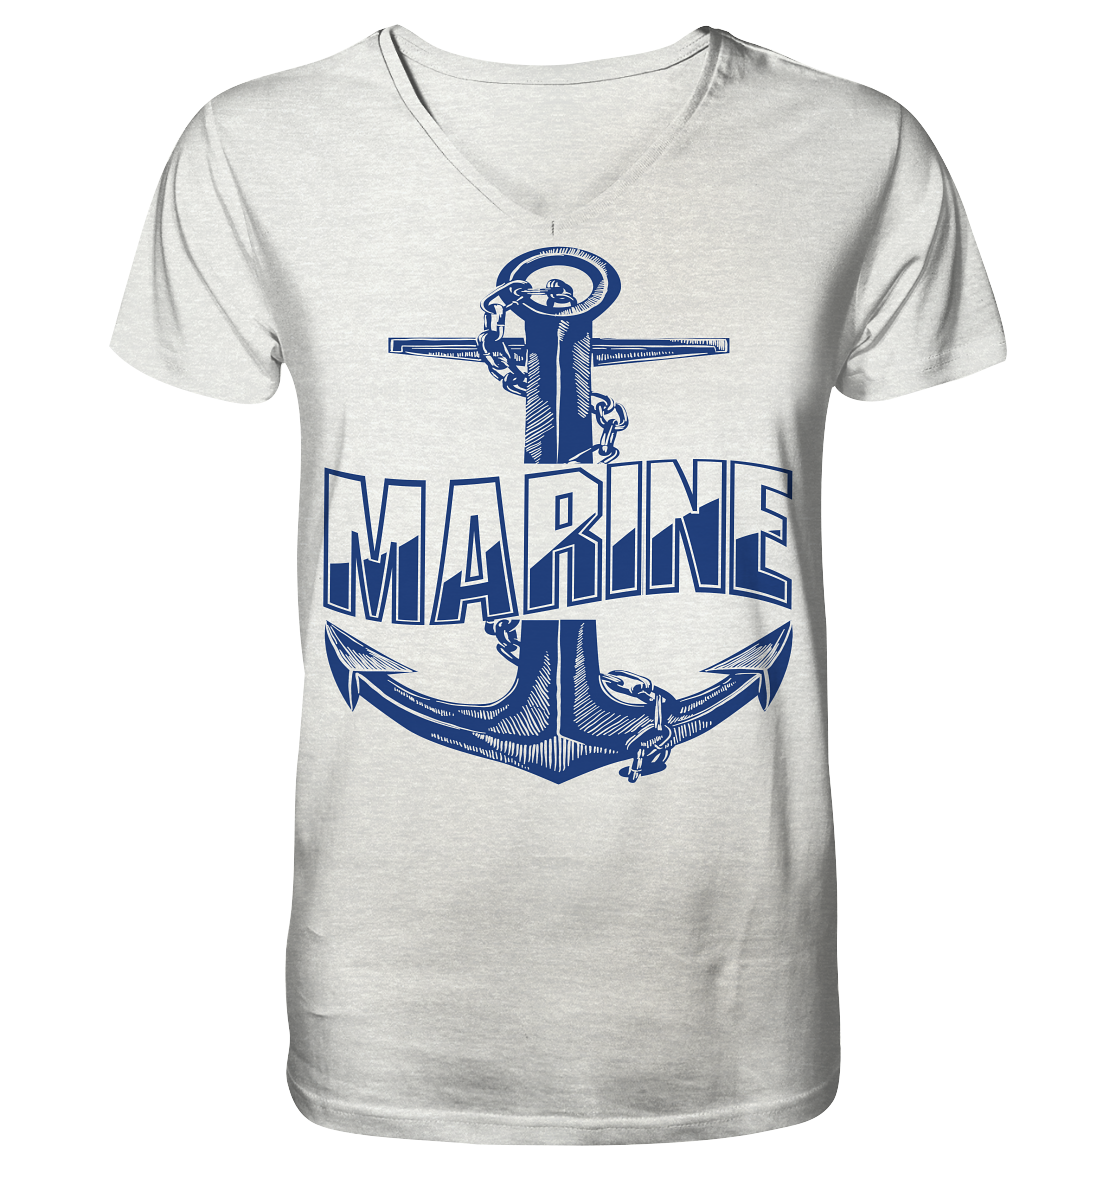 Anker MARINE - Mens Organic V-Neck Shirt